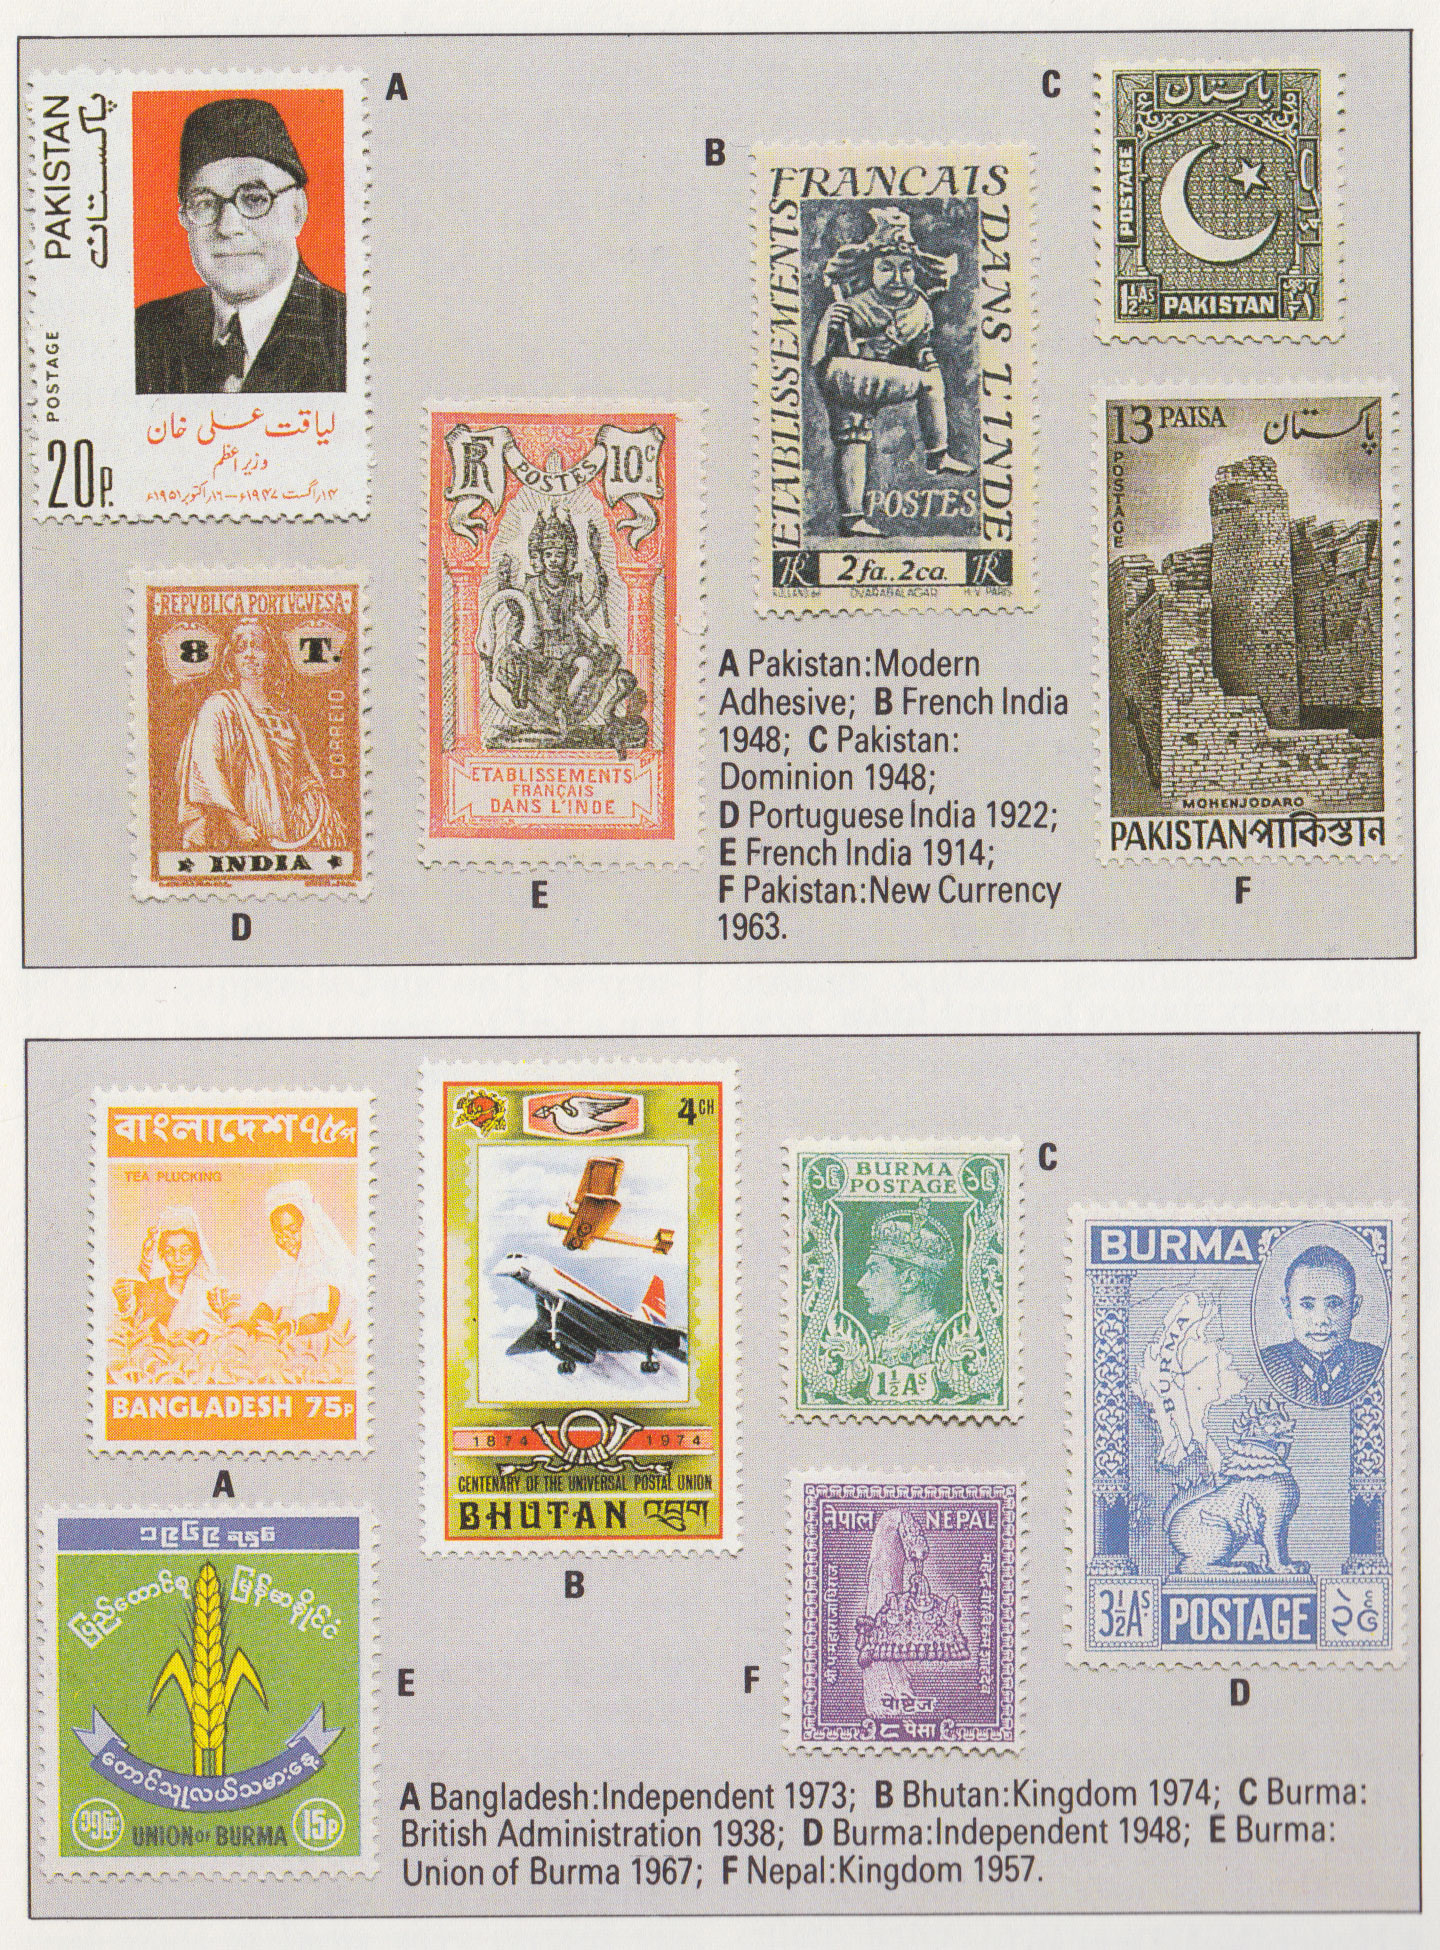 Pakistan Portuguese India stamps